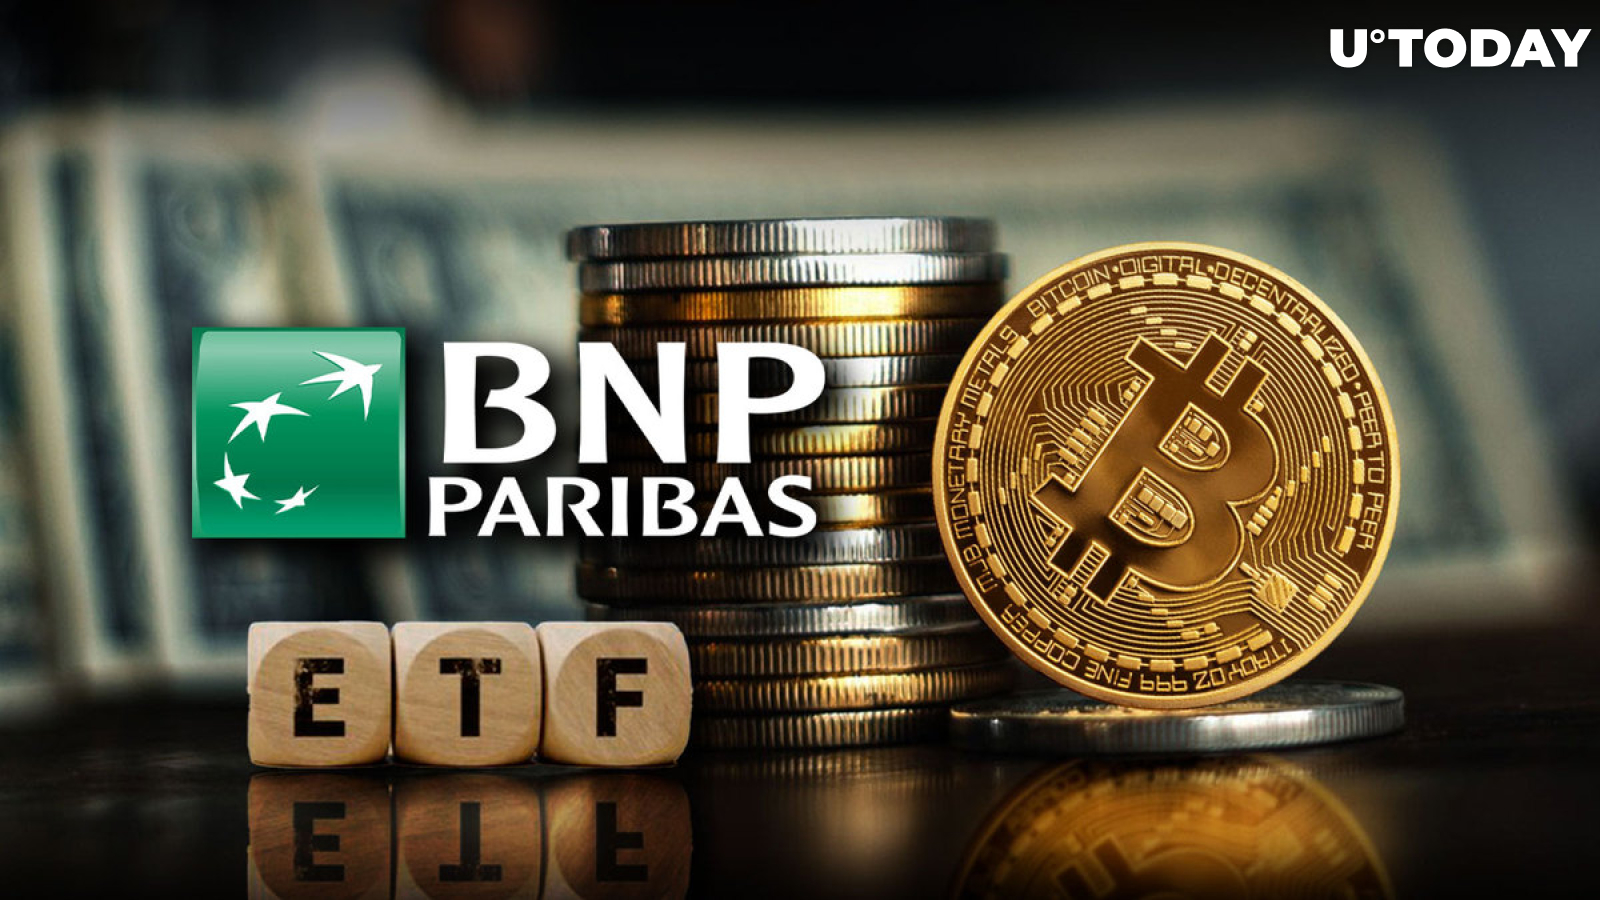 Europe's Banking Giant BNP Paribas Joins Bitcoin ETF Bandwagon